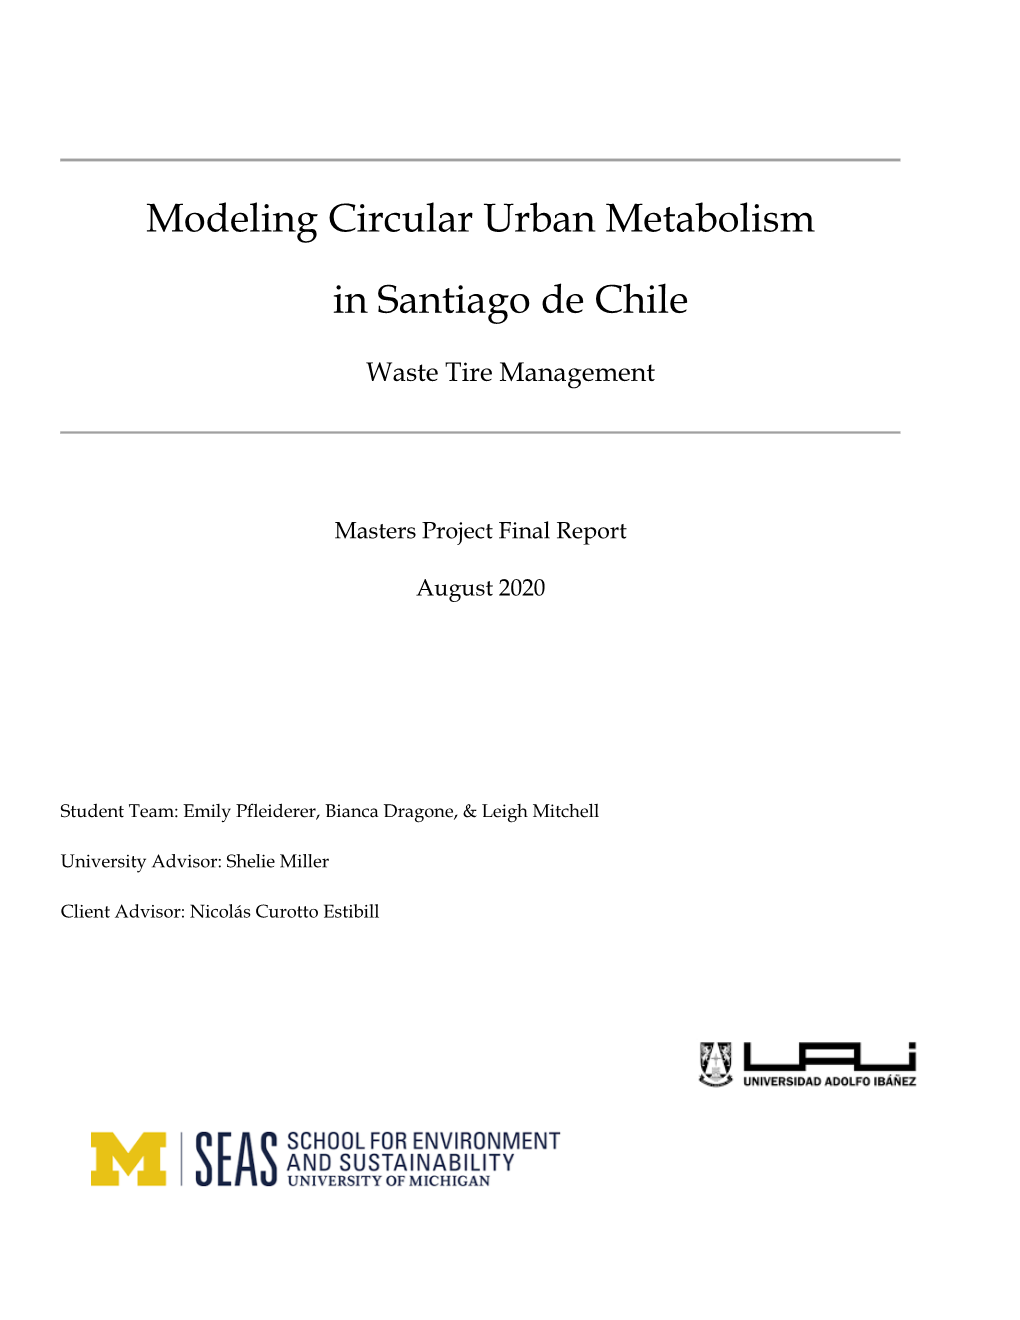 Modeling Circular Urban Metabolism in Santiago De Chile